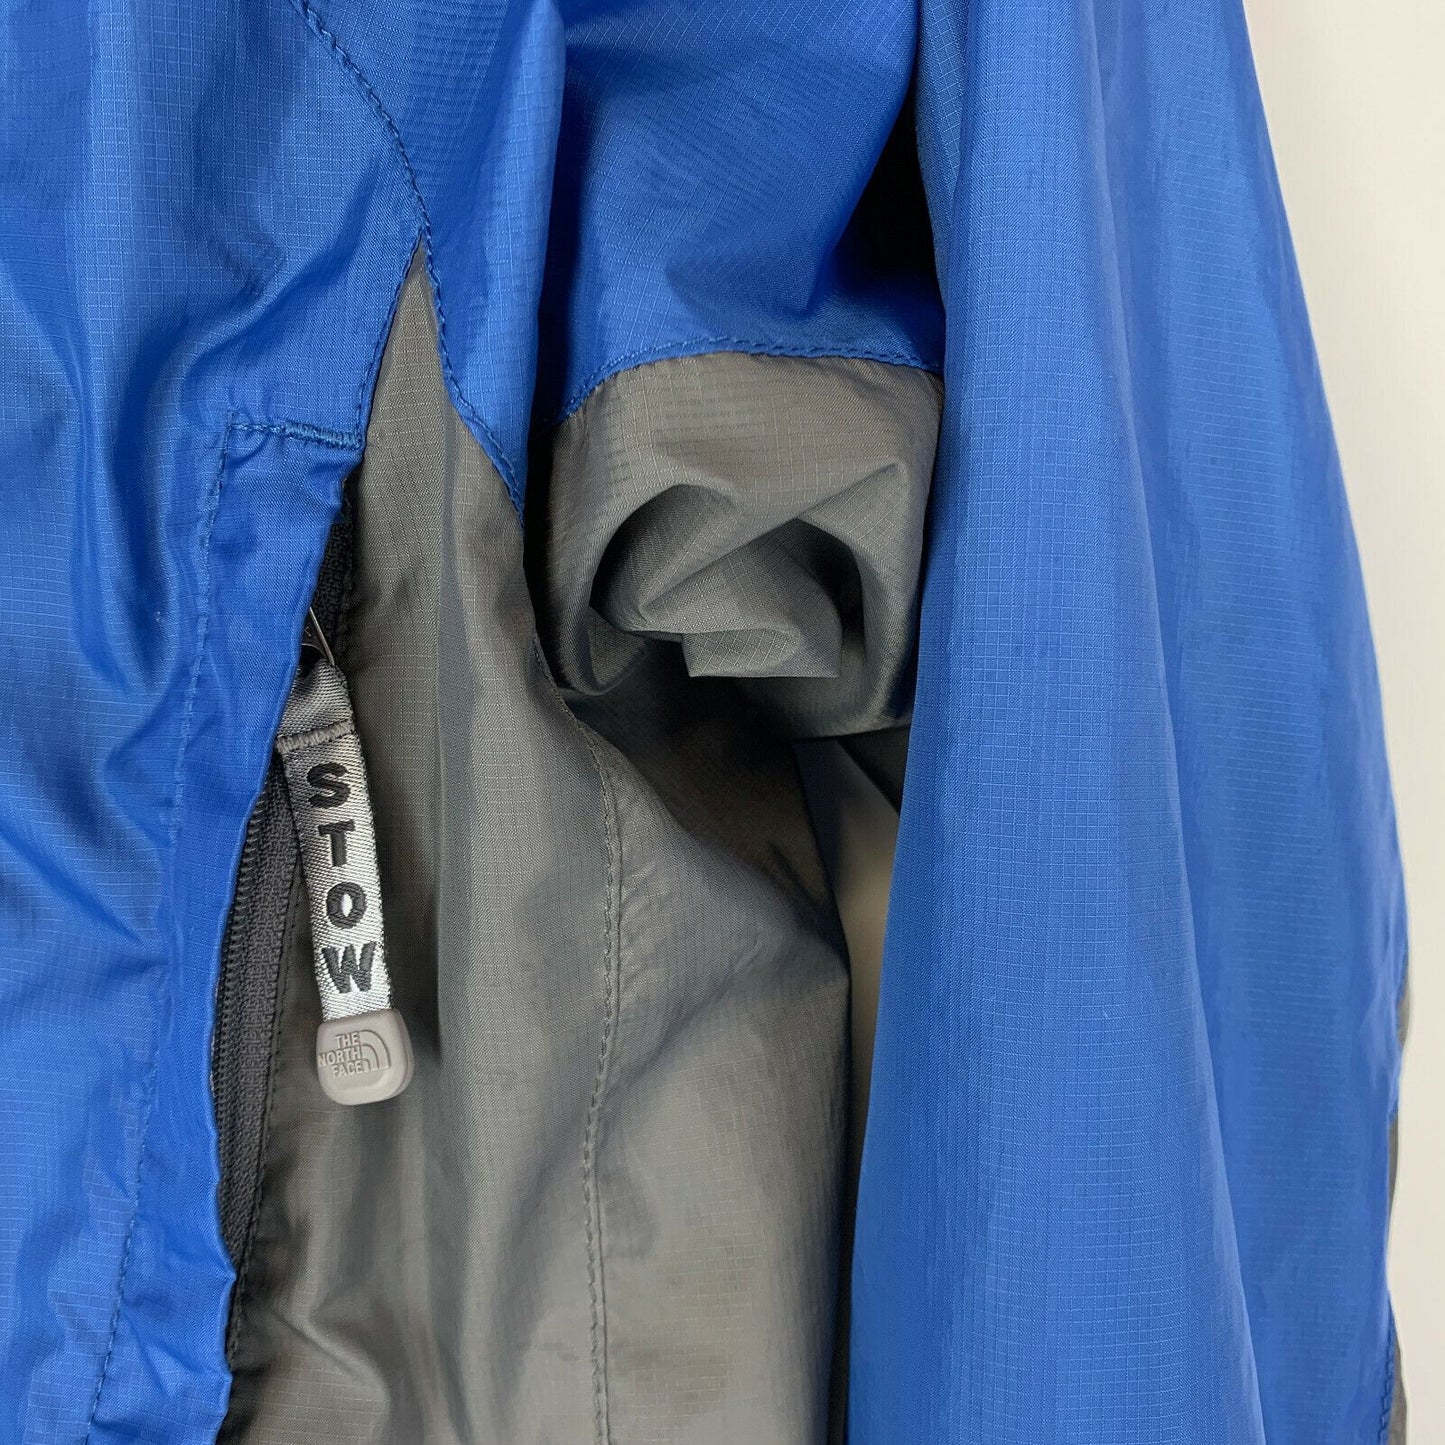 The North Face Womens Windbreaker Jacket Vented Blue Stow Pocket Medium